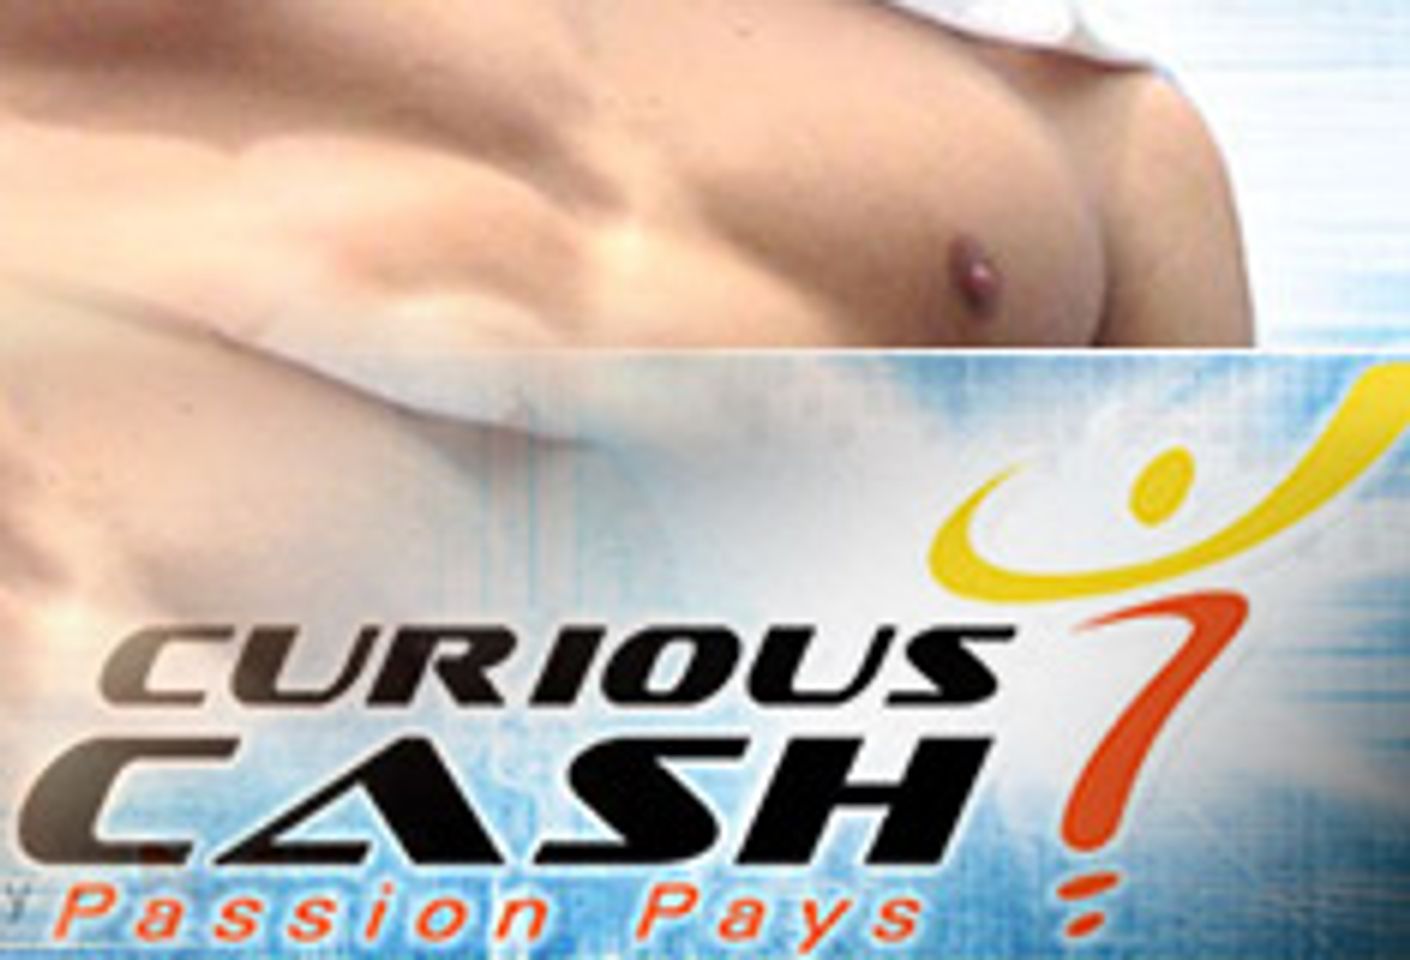 CuriousCash Offers 70-Percent Revshare